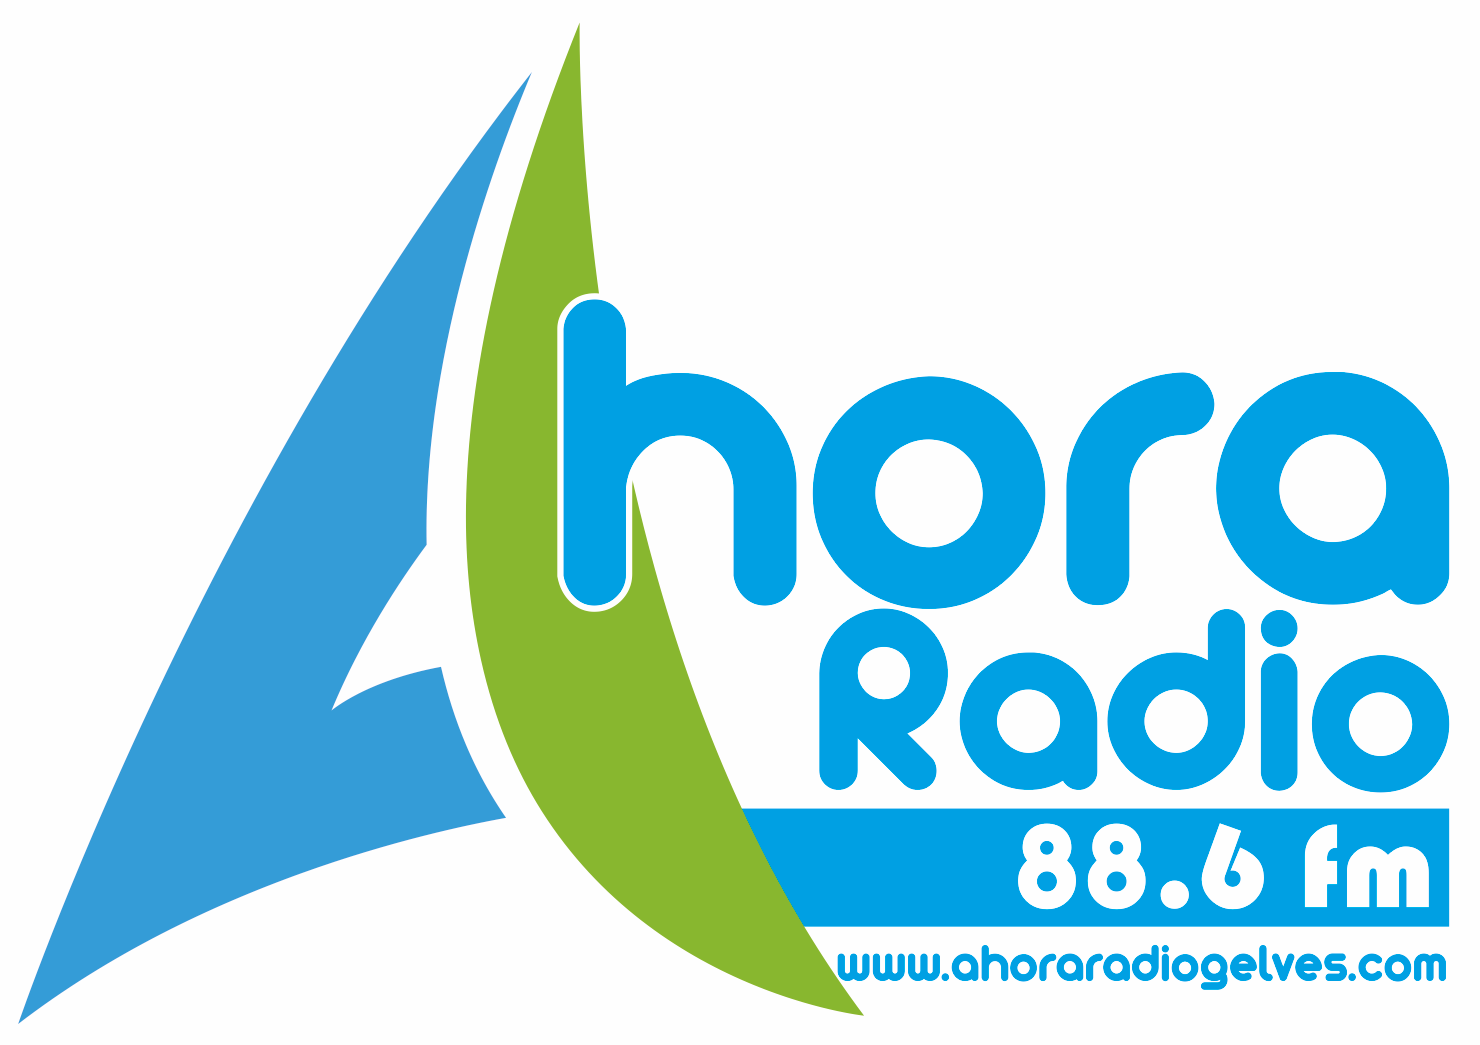 ahora_radio_logo_web.png